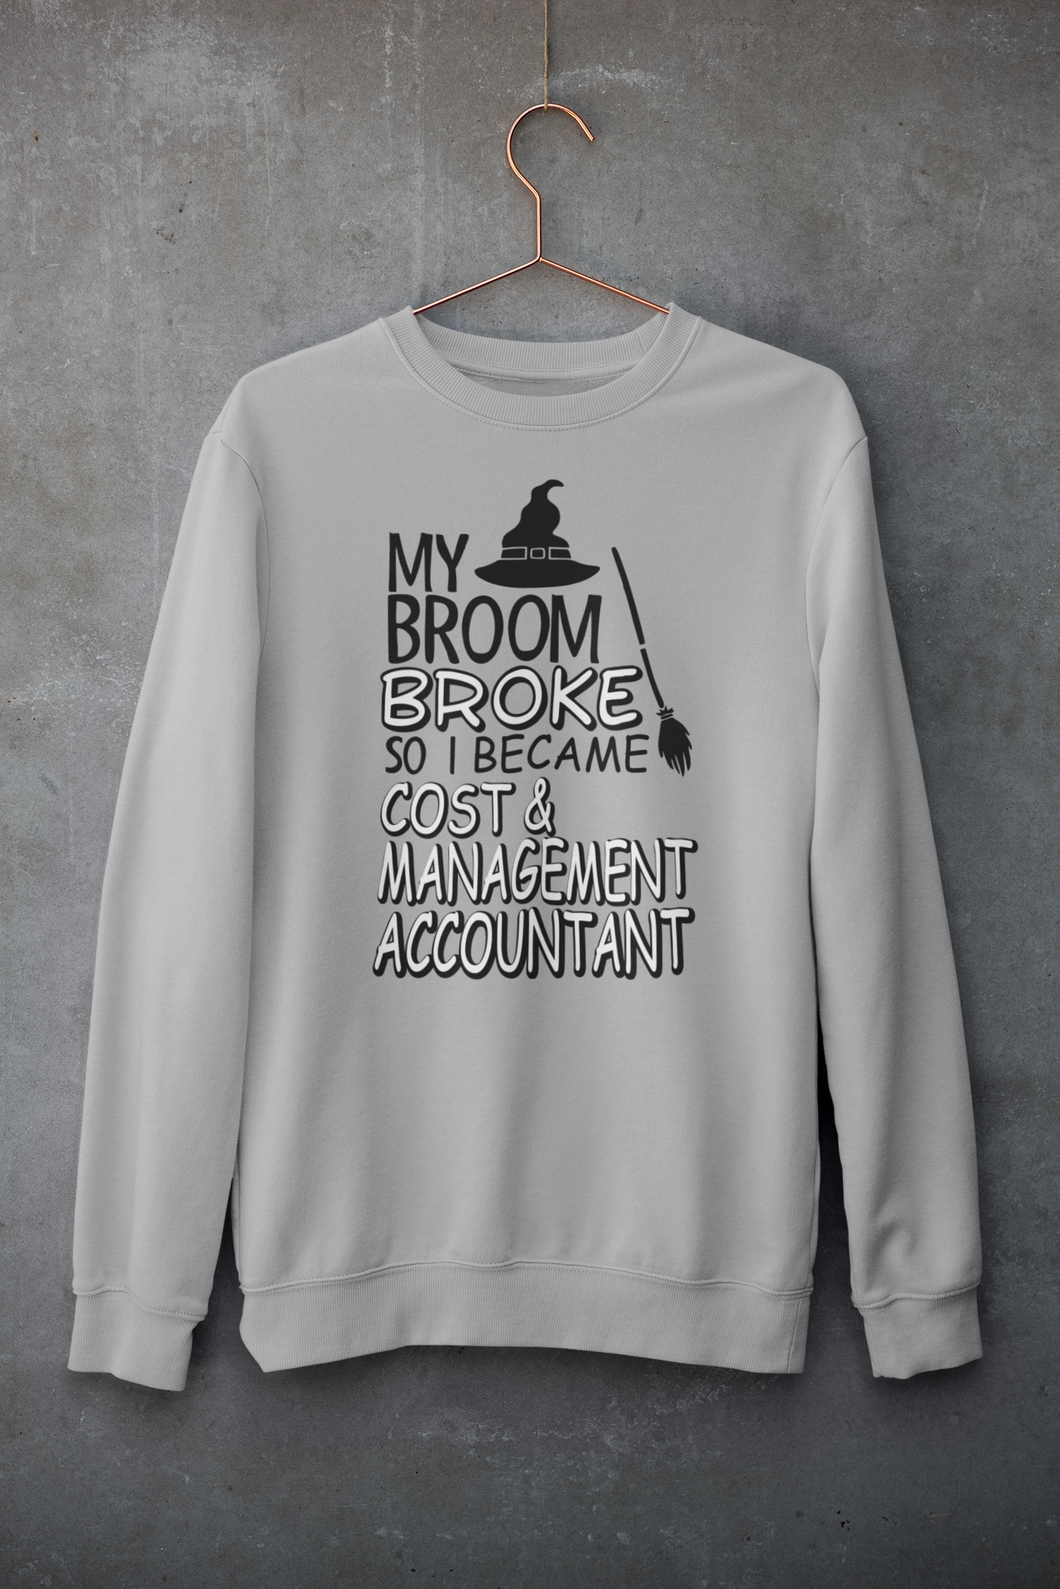 My Broom Broke - CMA